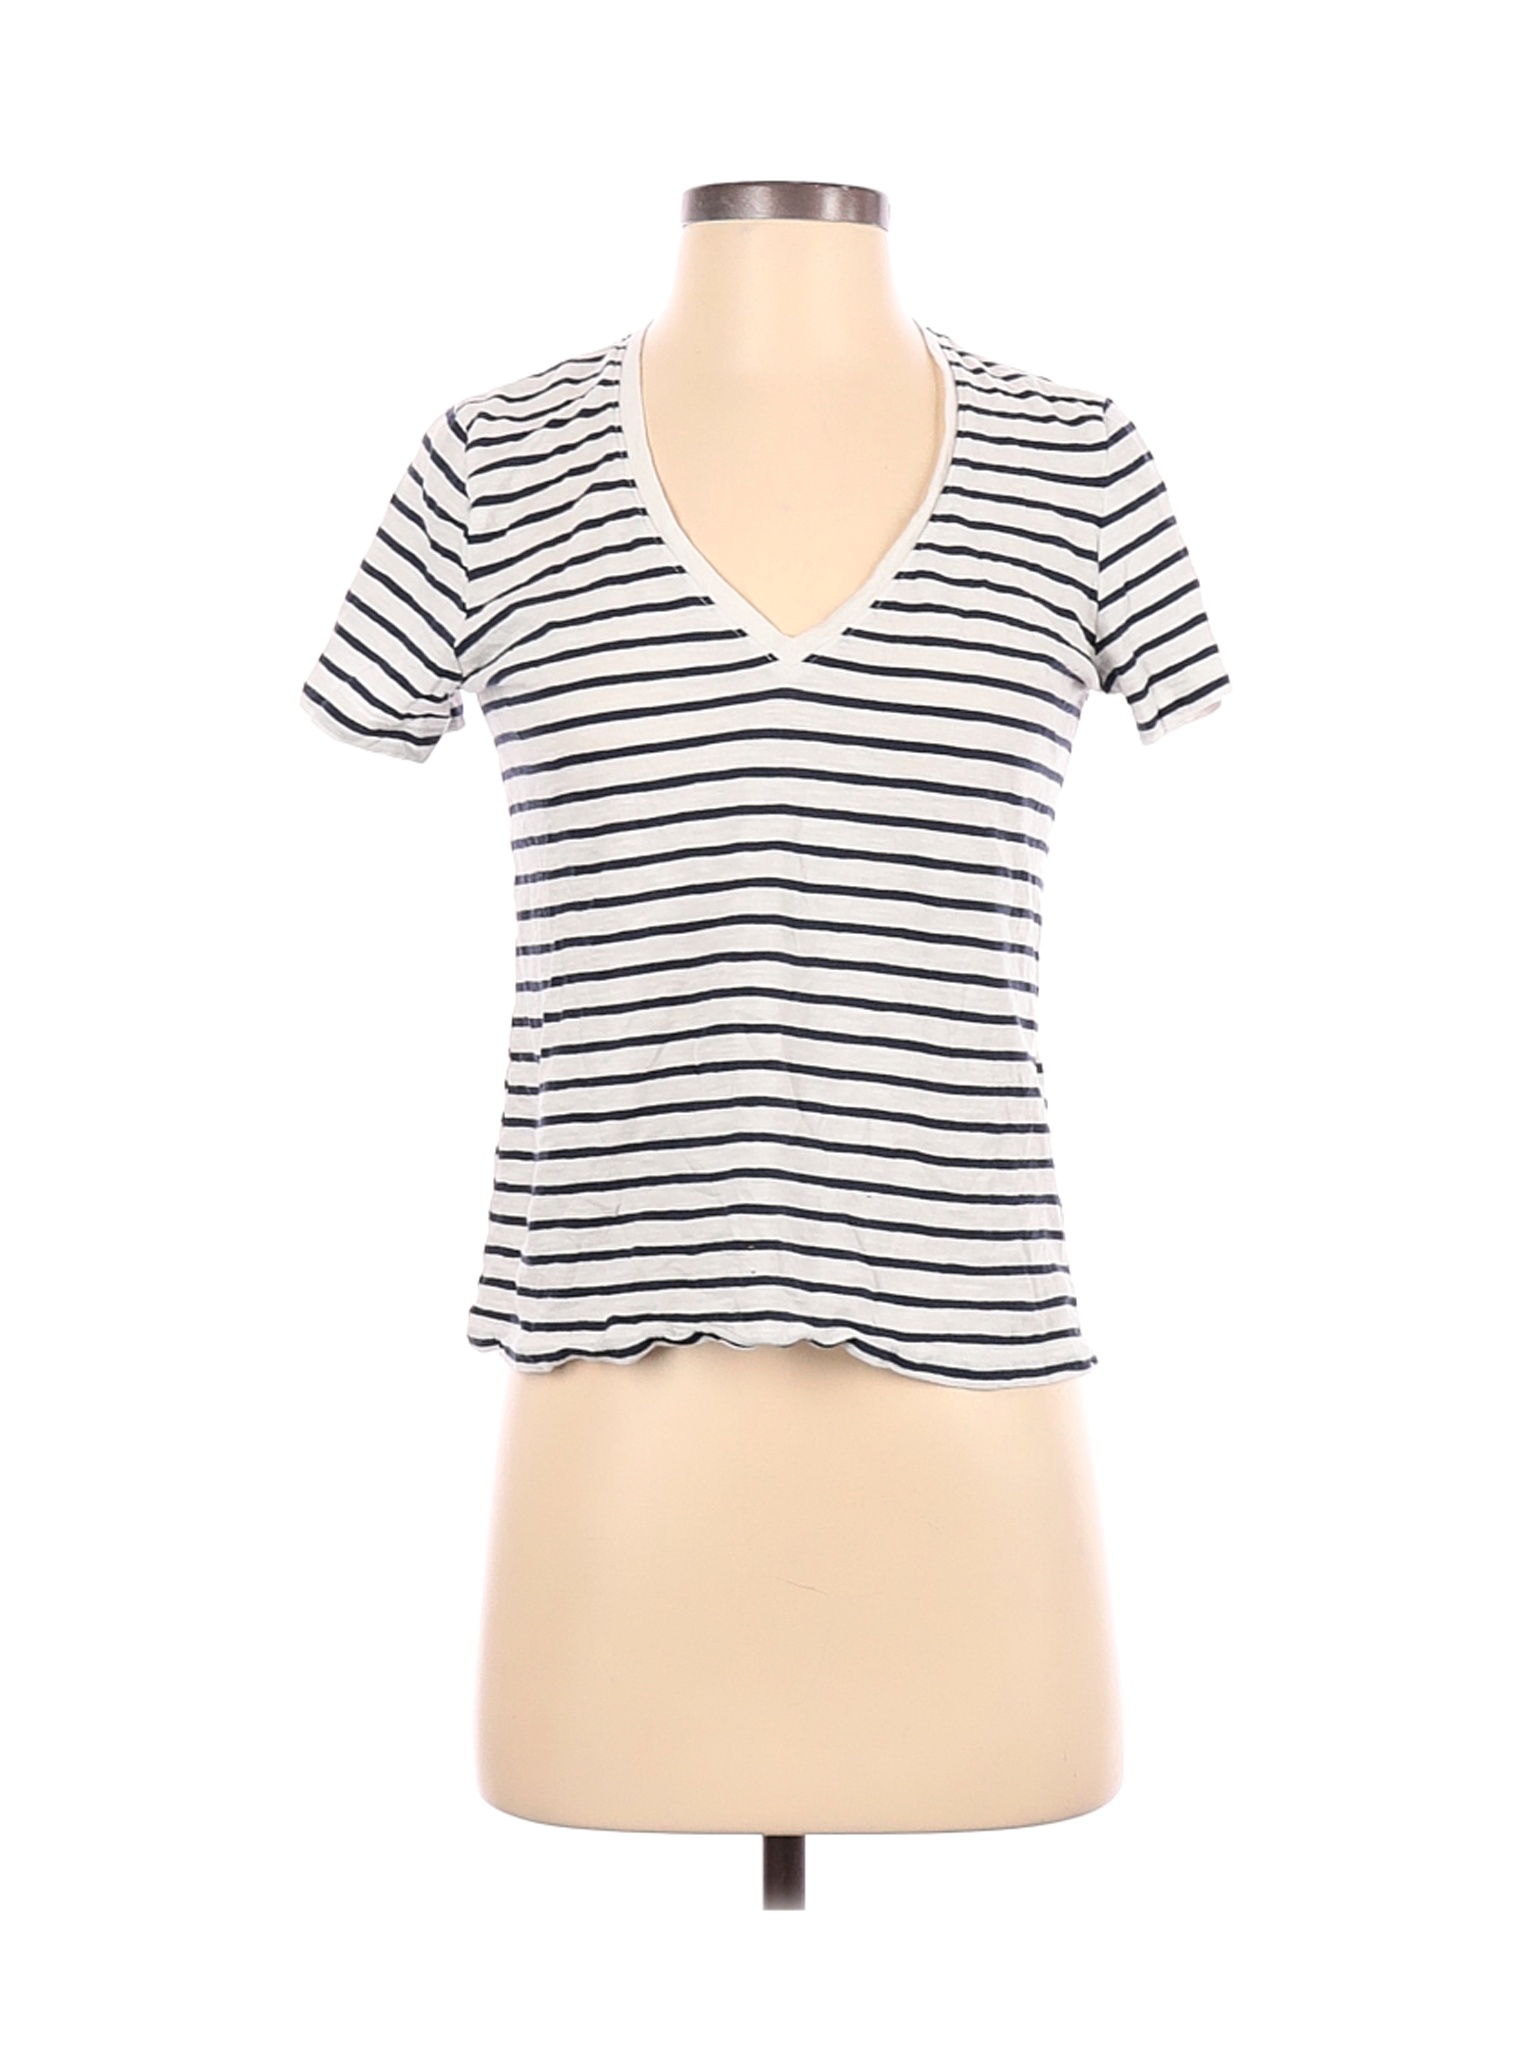 Madewell Women White Short Sleeve T-Shirt S | eBay